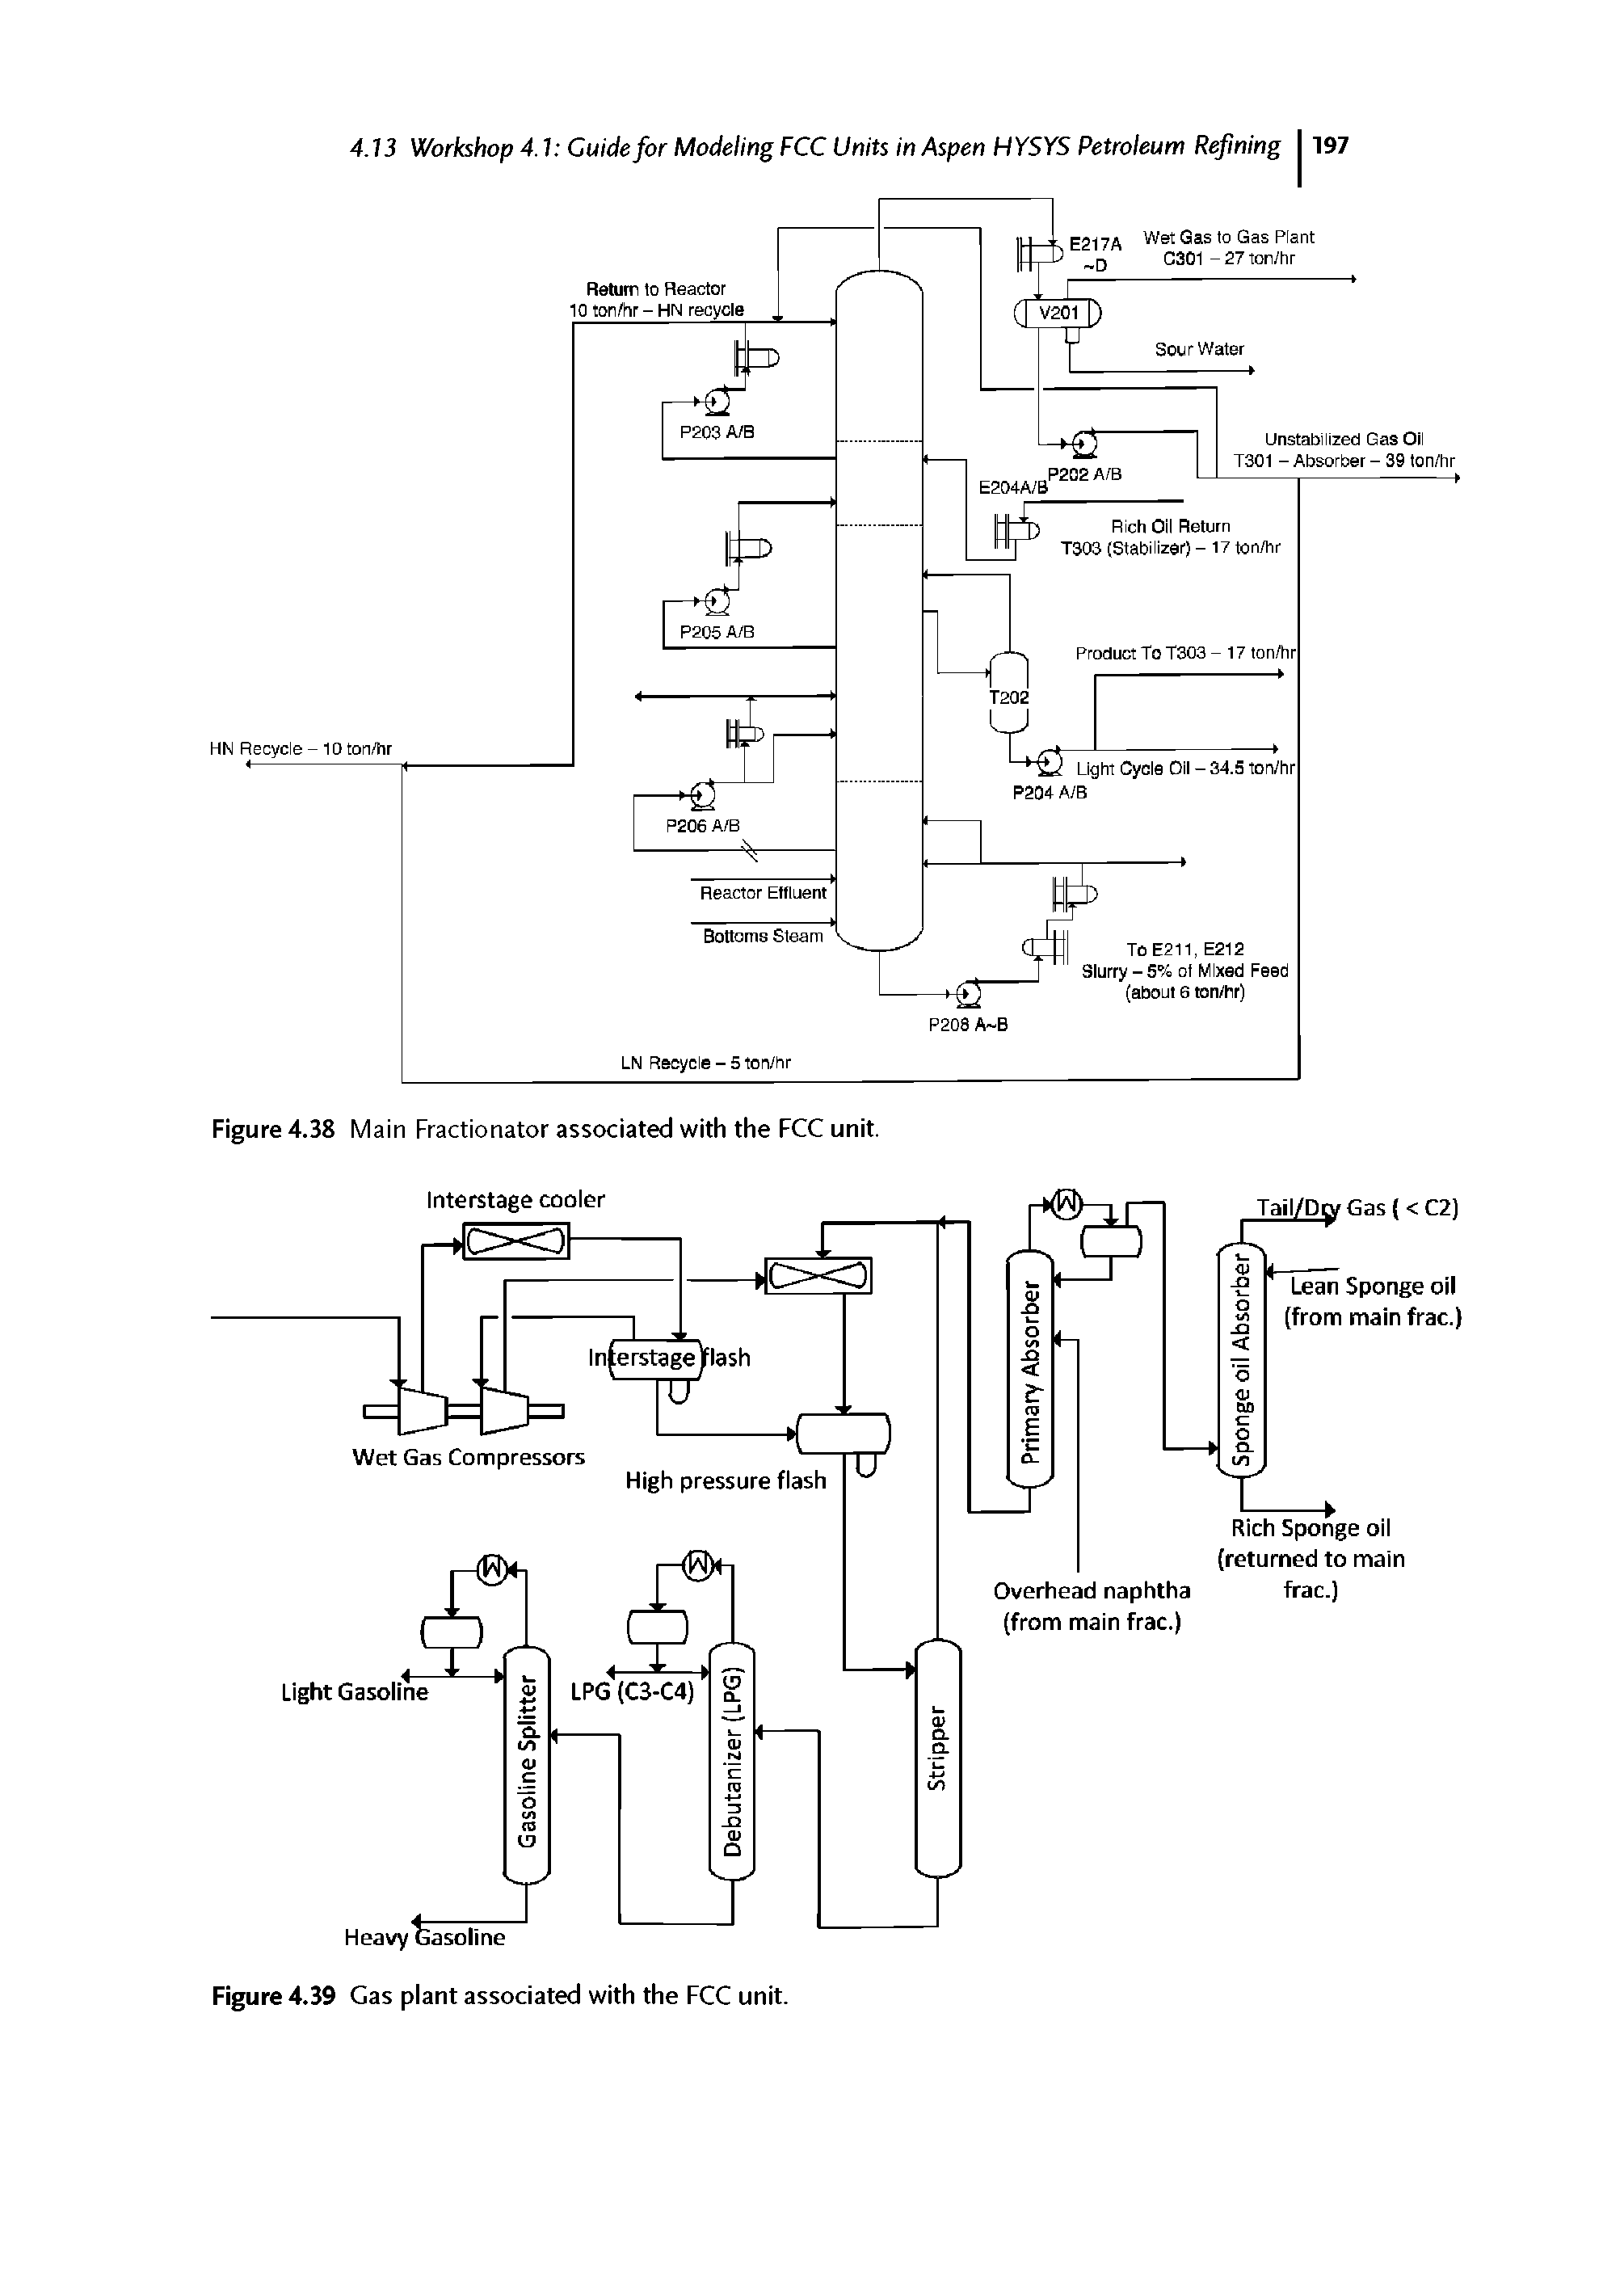 Figure 4.38 Main Fractionator associated with the FCC unit.